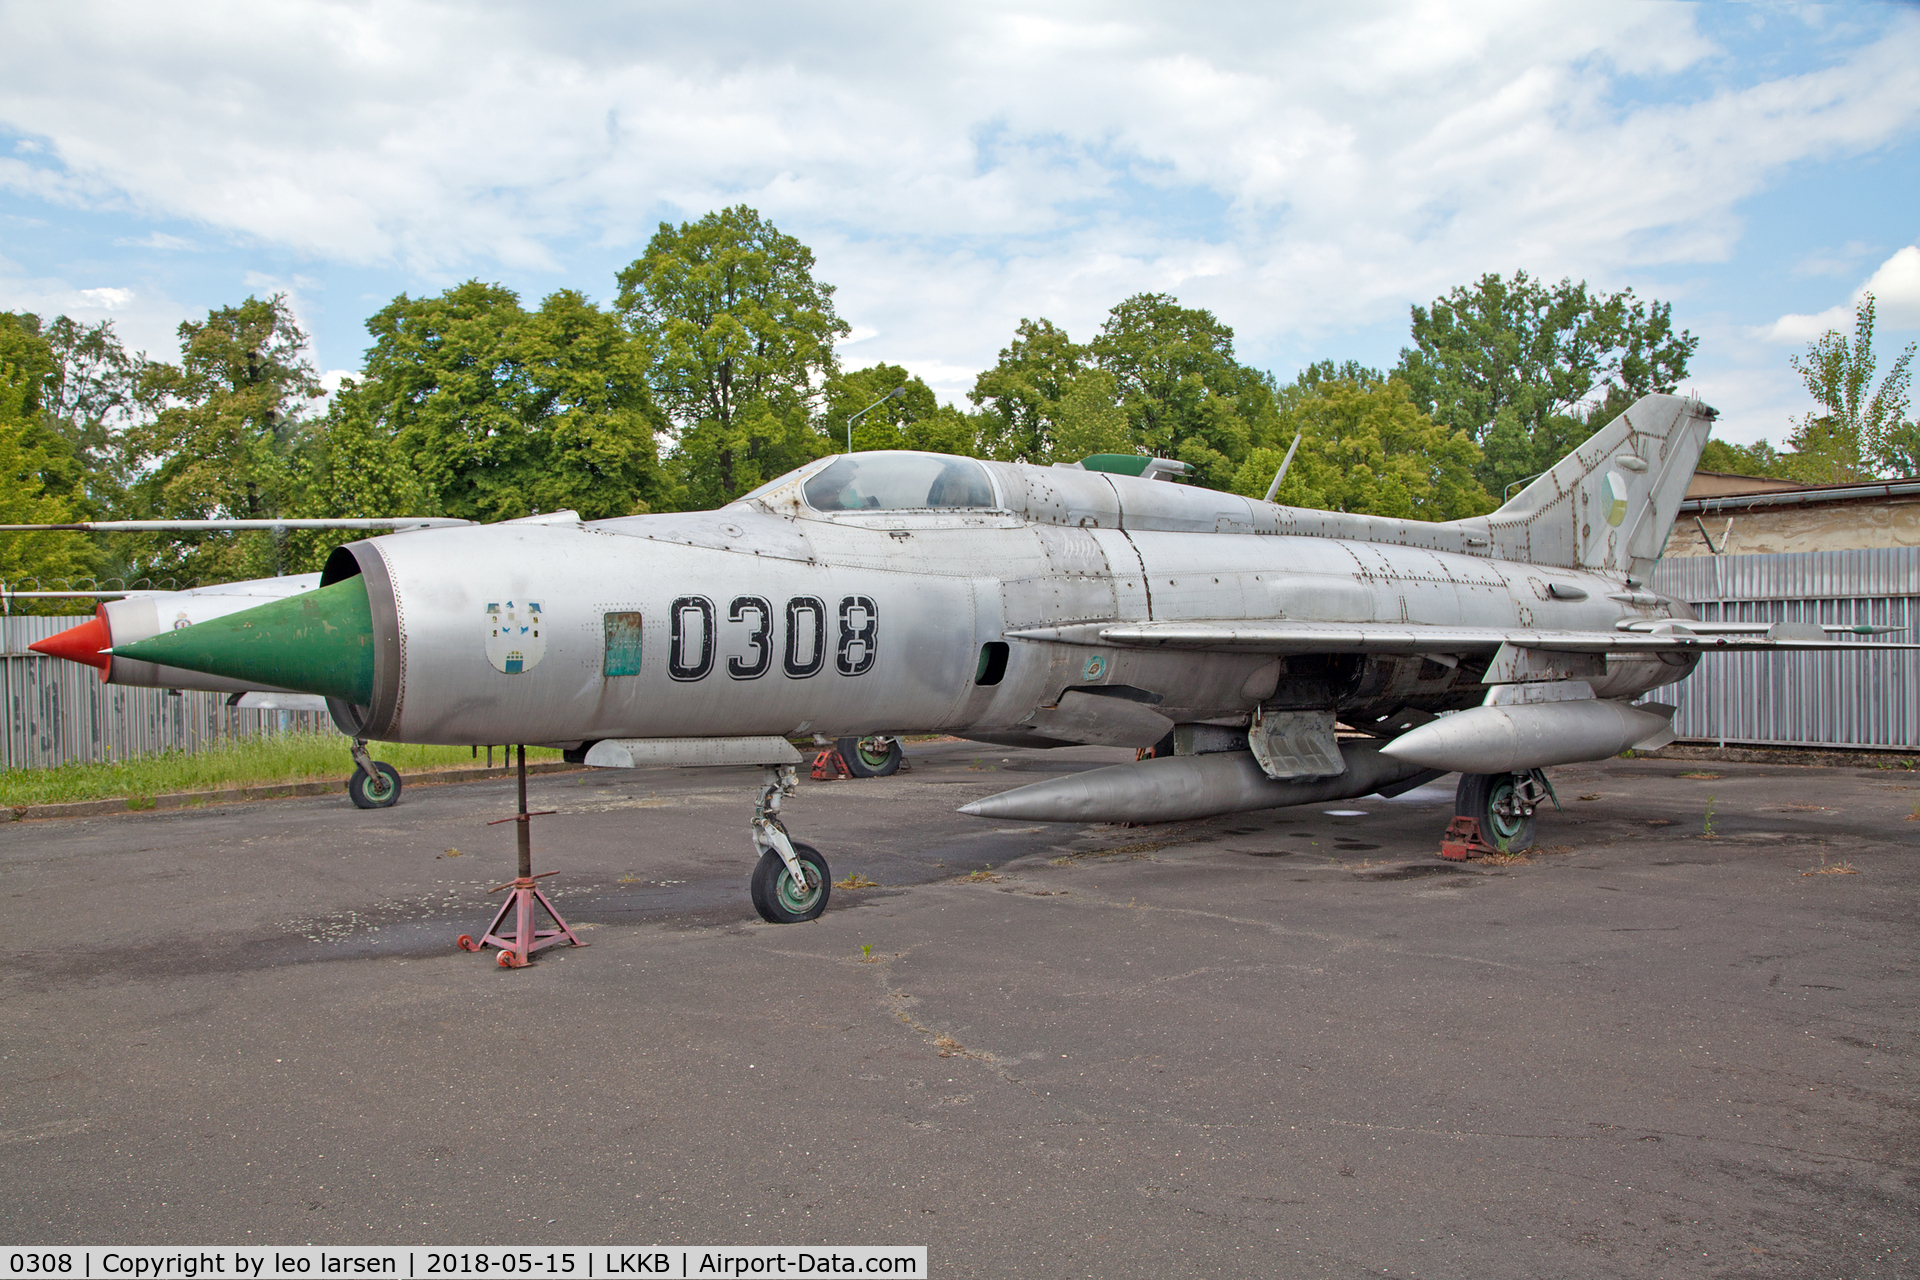 0308, 1964 Mikoyan-Gurevich MiG-21PF C/N 560308, Kebly Air Museum 15.5.2018